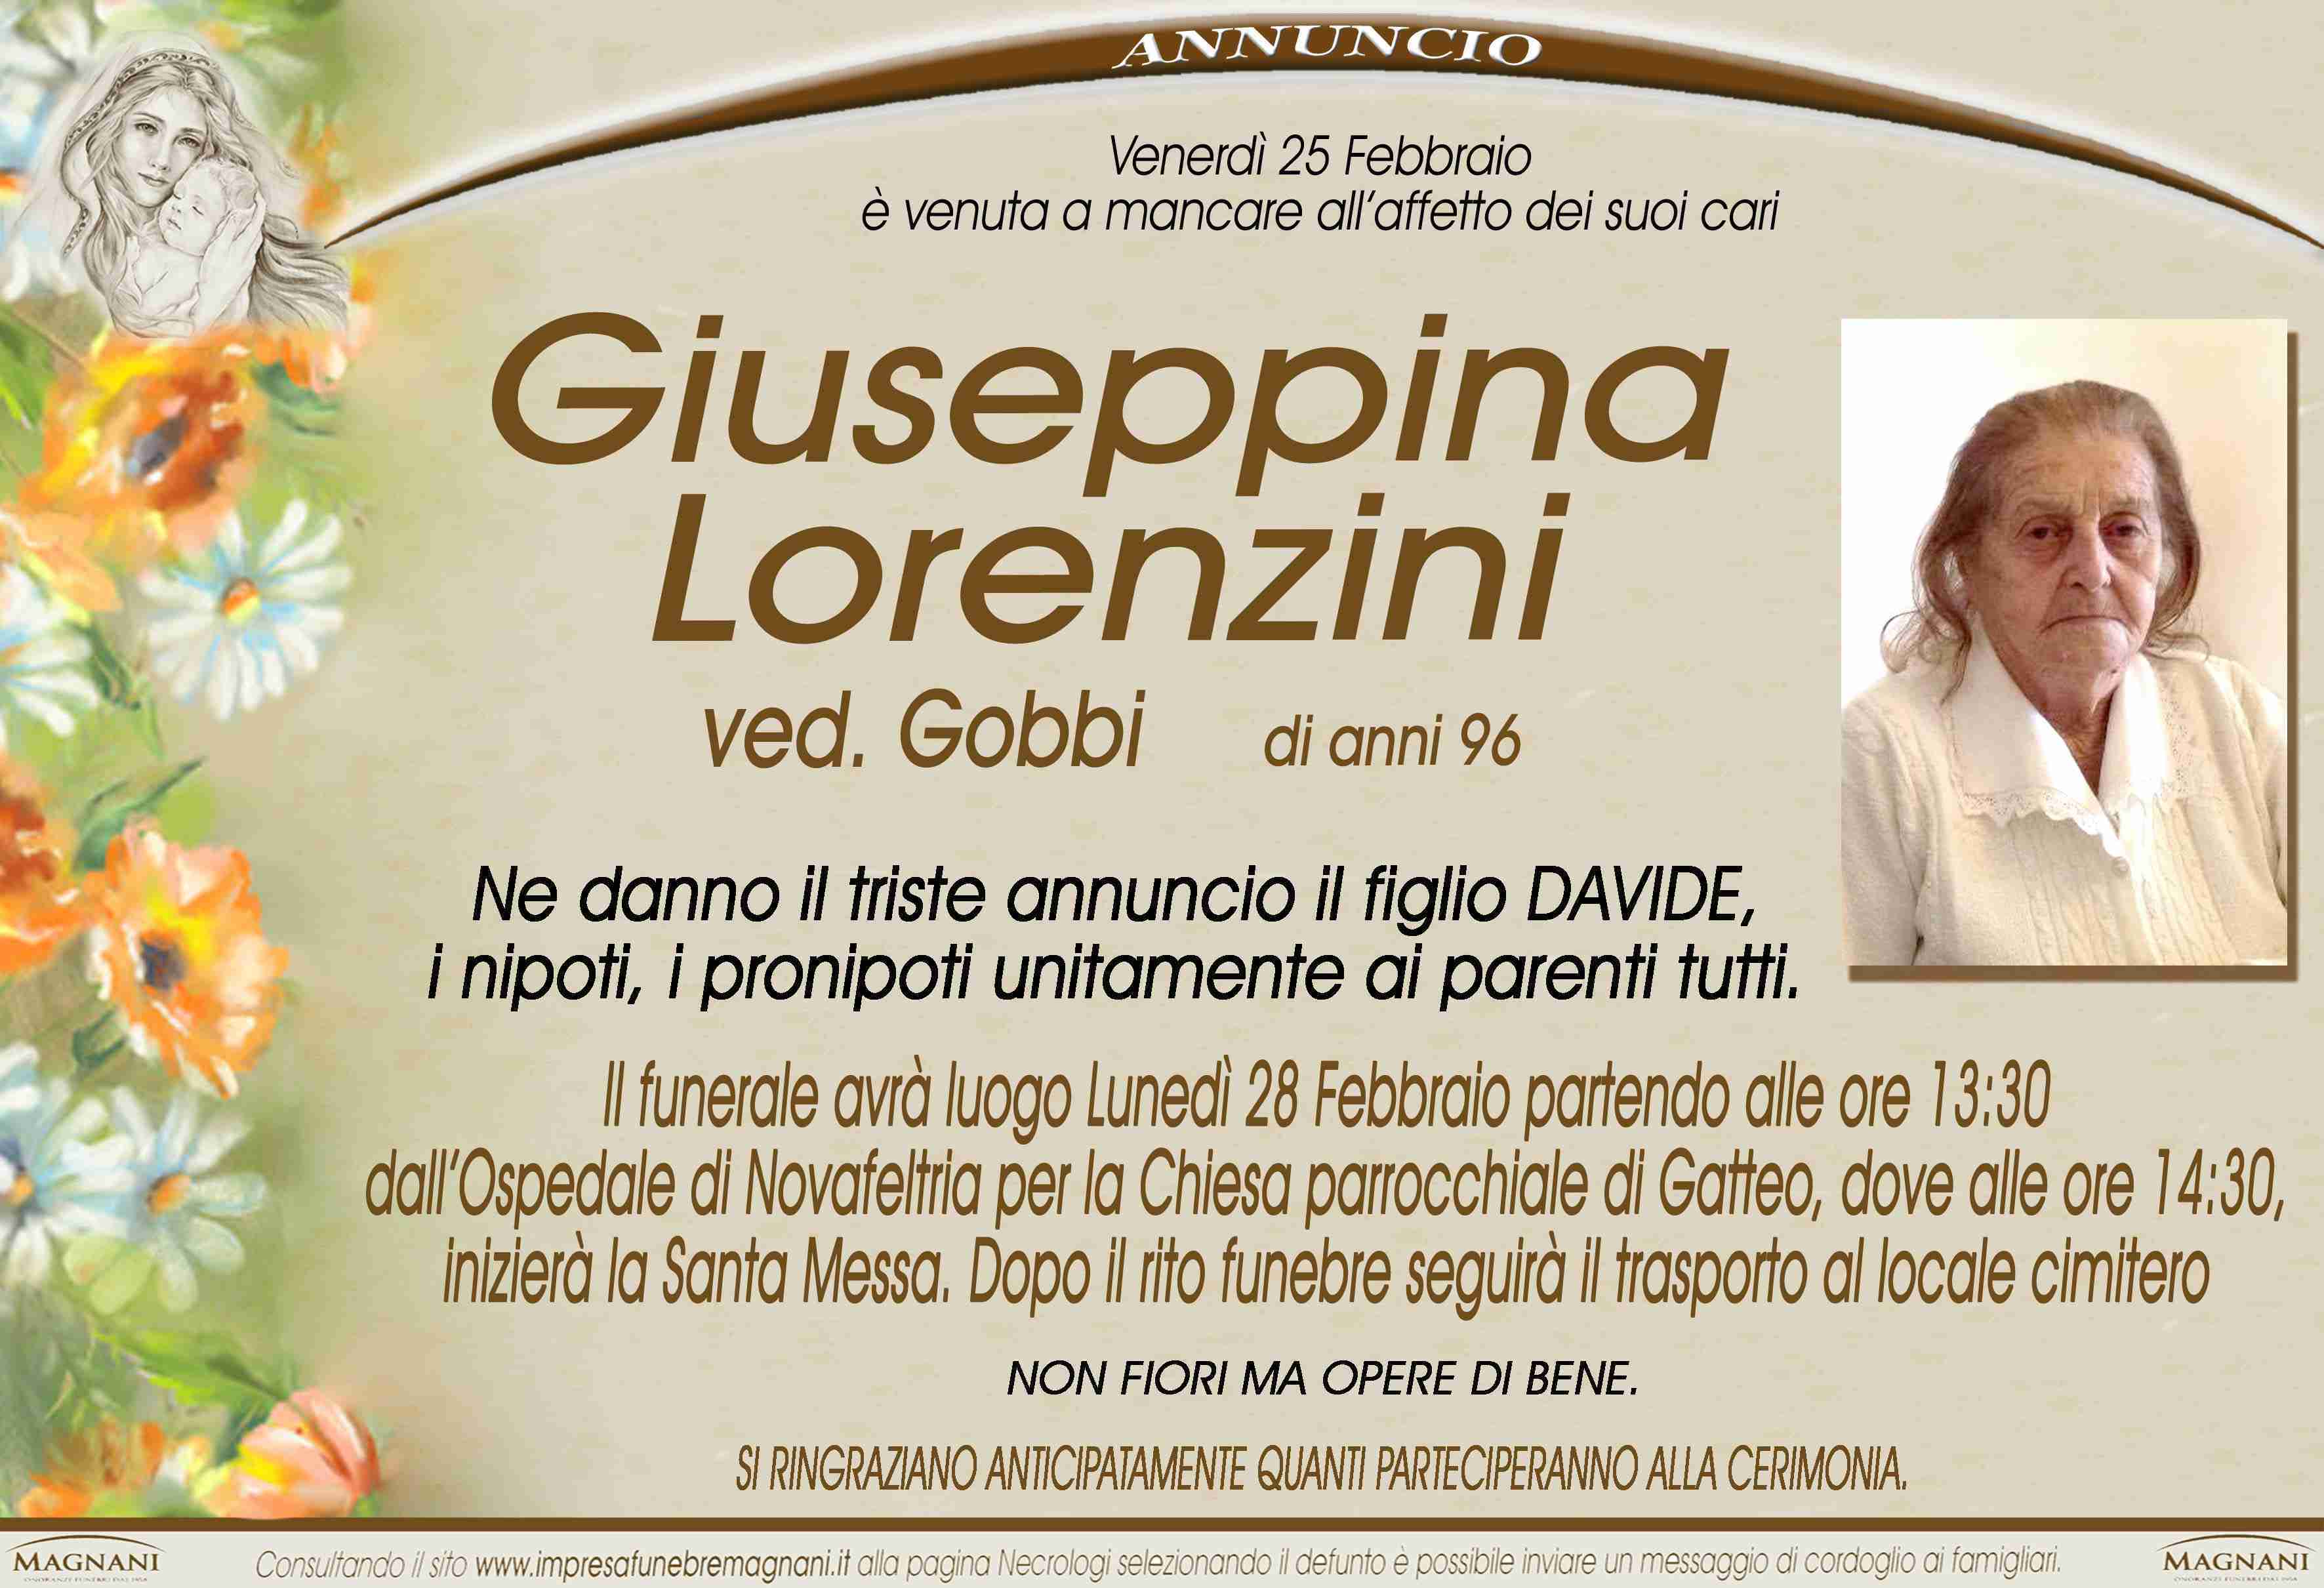 Giuseppina Lorenzini